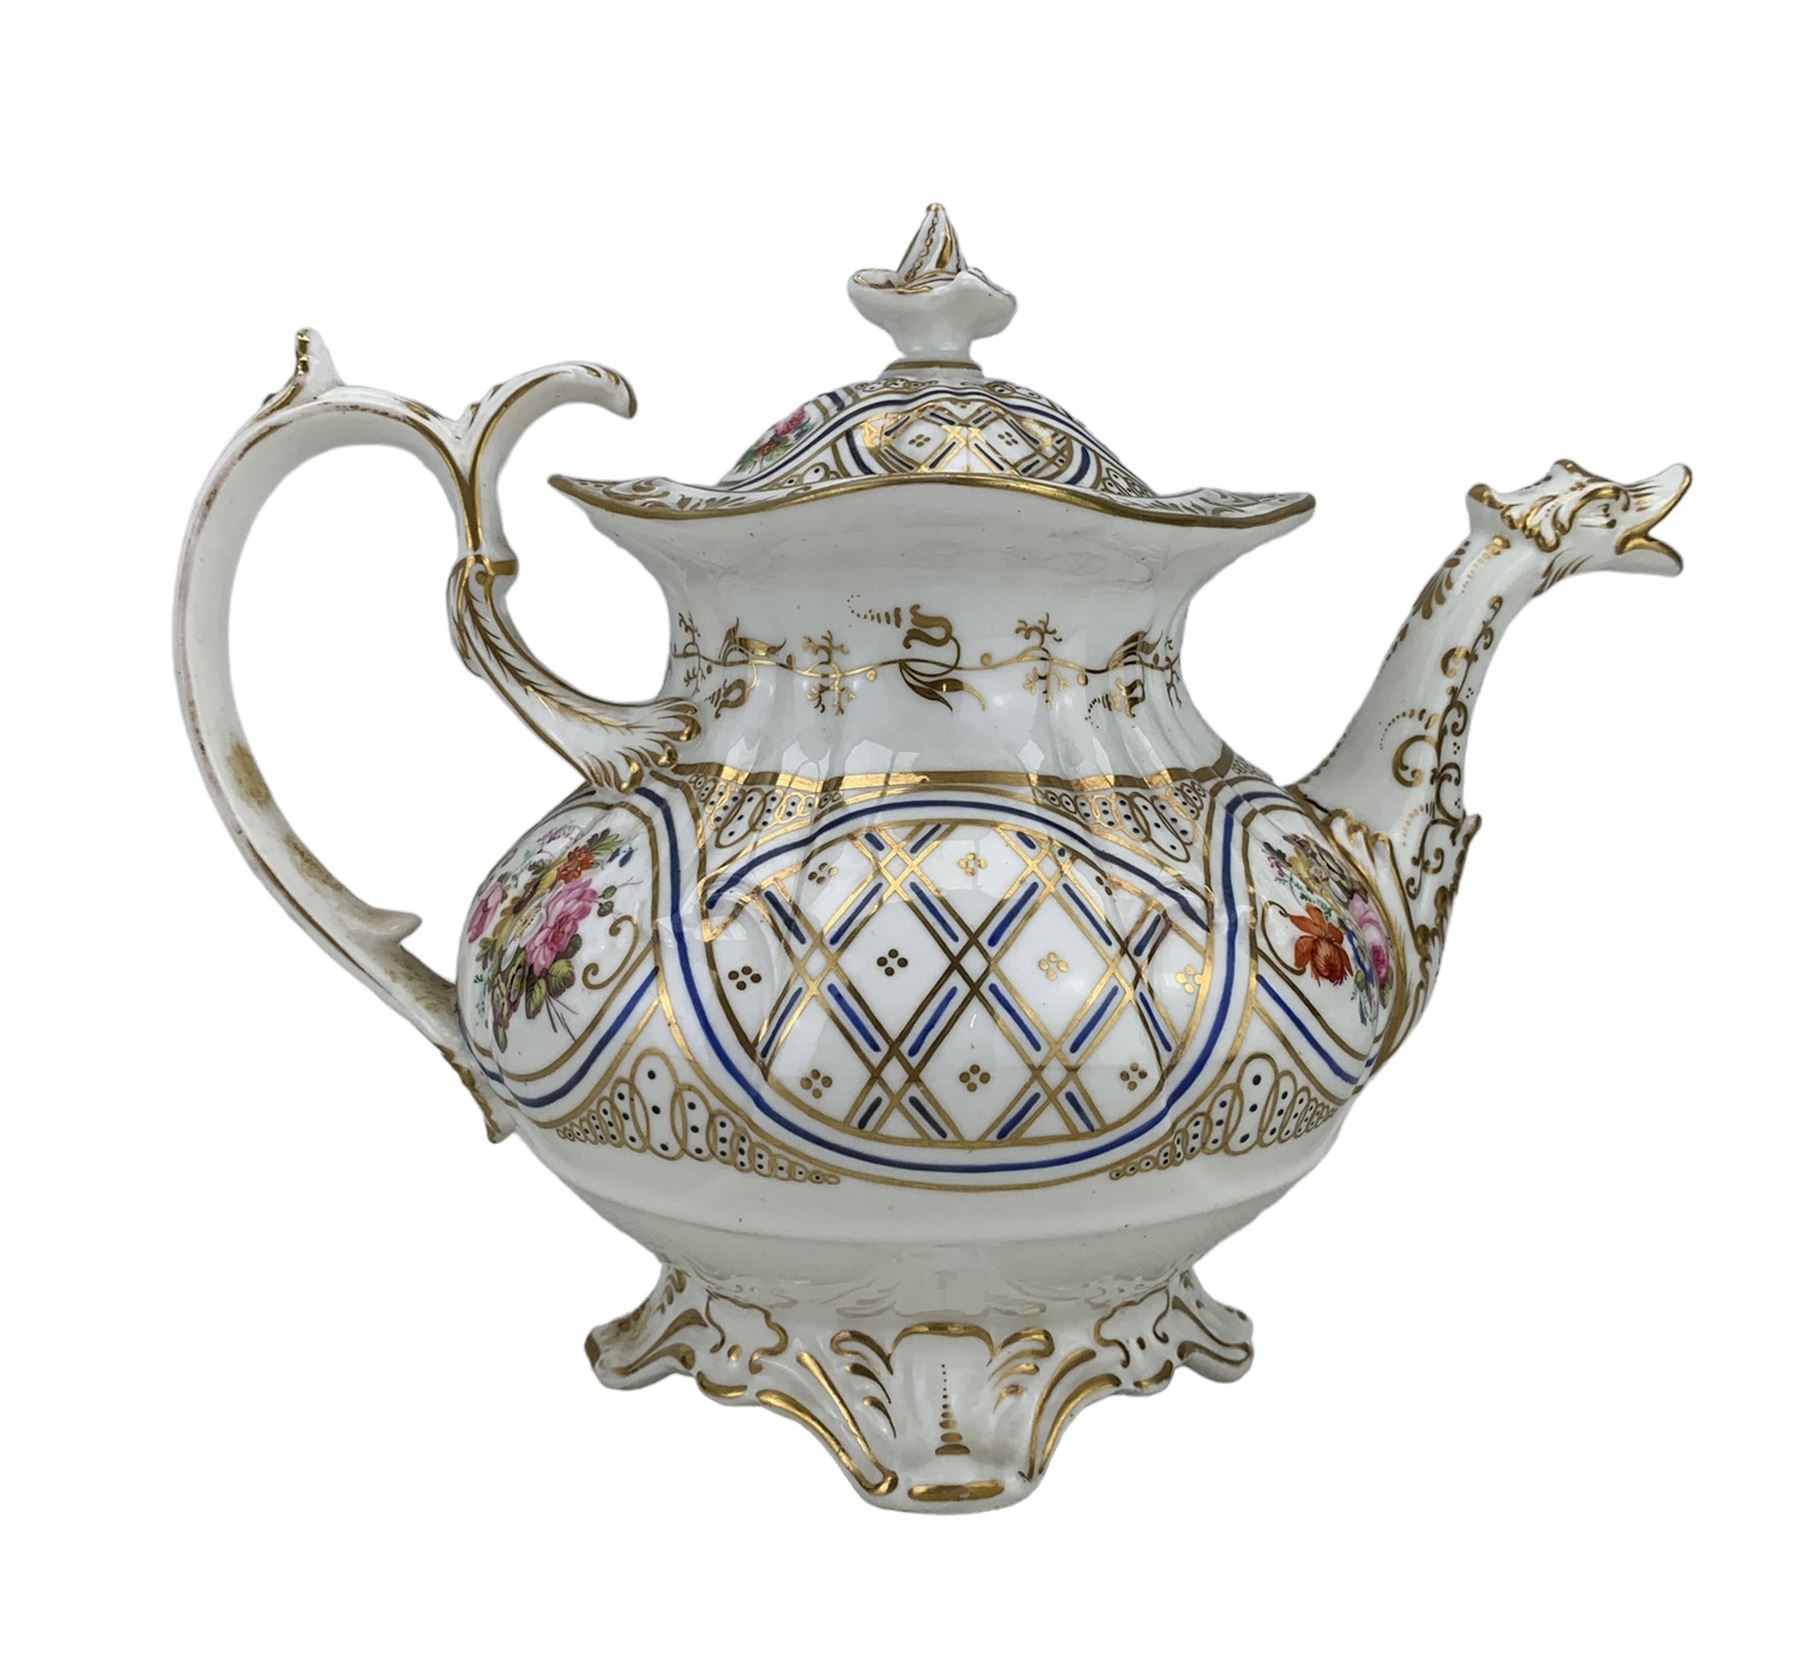 19th century Coalport porcelain teapot with acanthus moulded handle and Dragon spout - Image 2 of 3